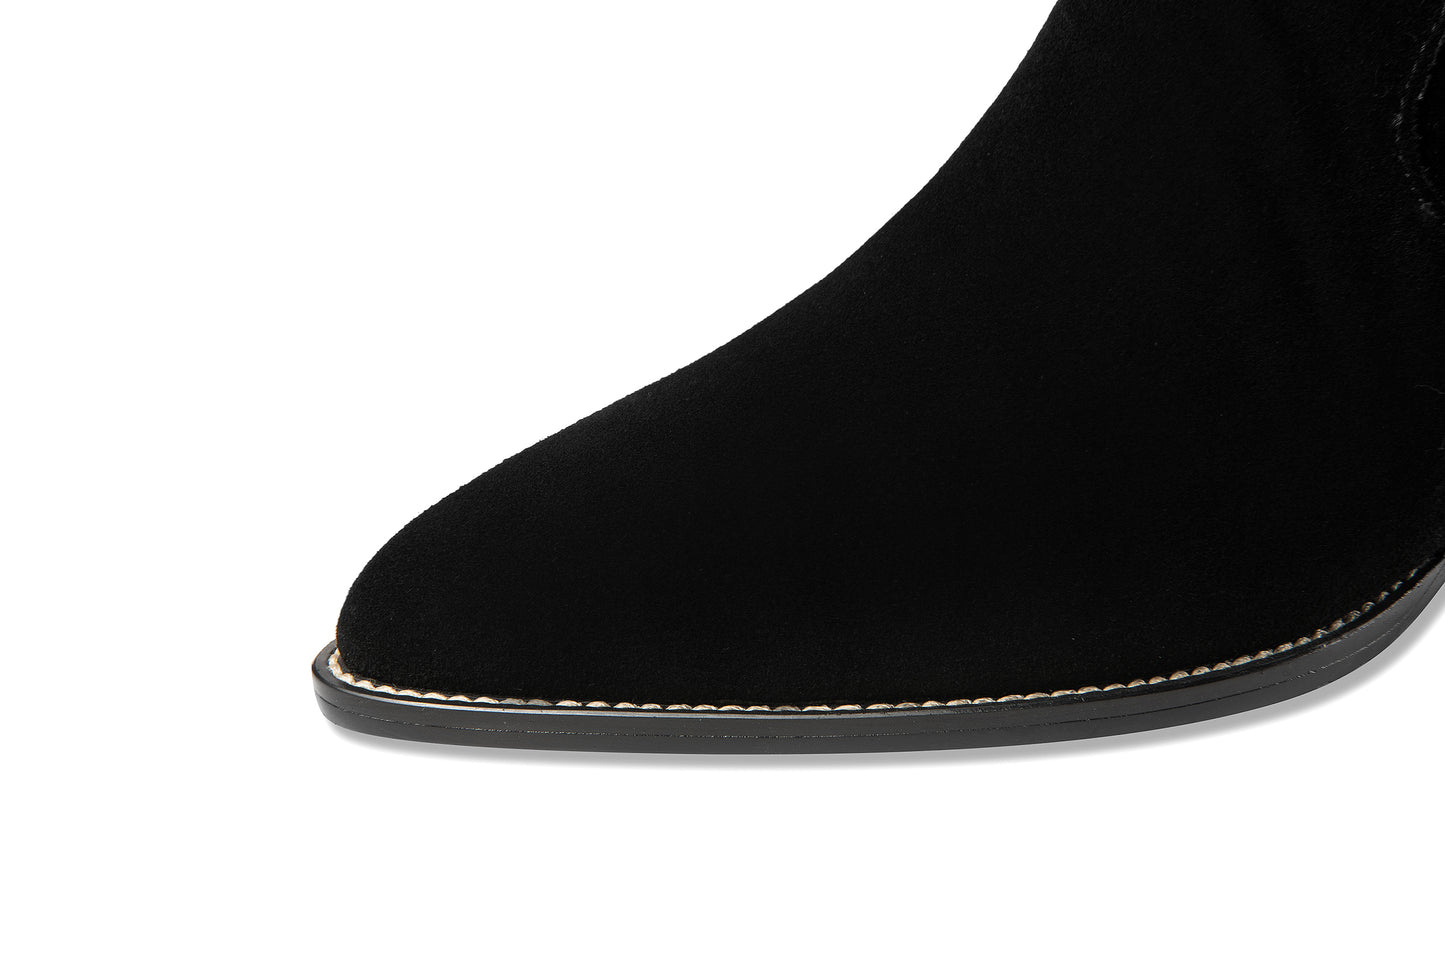 TinaCus Handmade Women's Pointed Toe Suede Leather Block Heel Side Zip Up Mid-Calf Boots